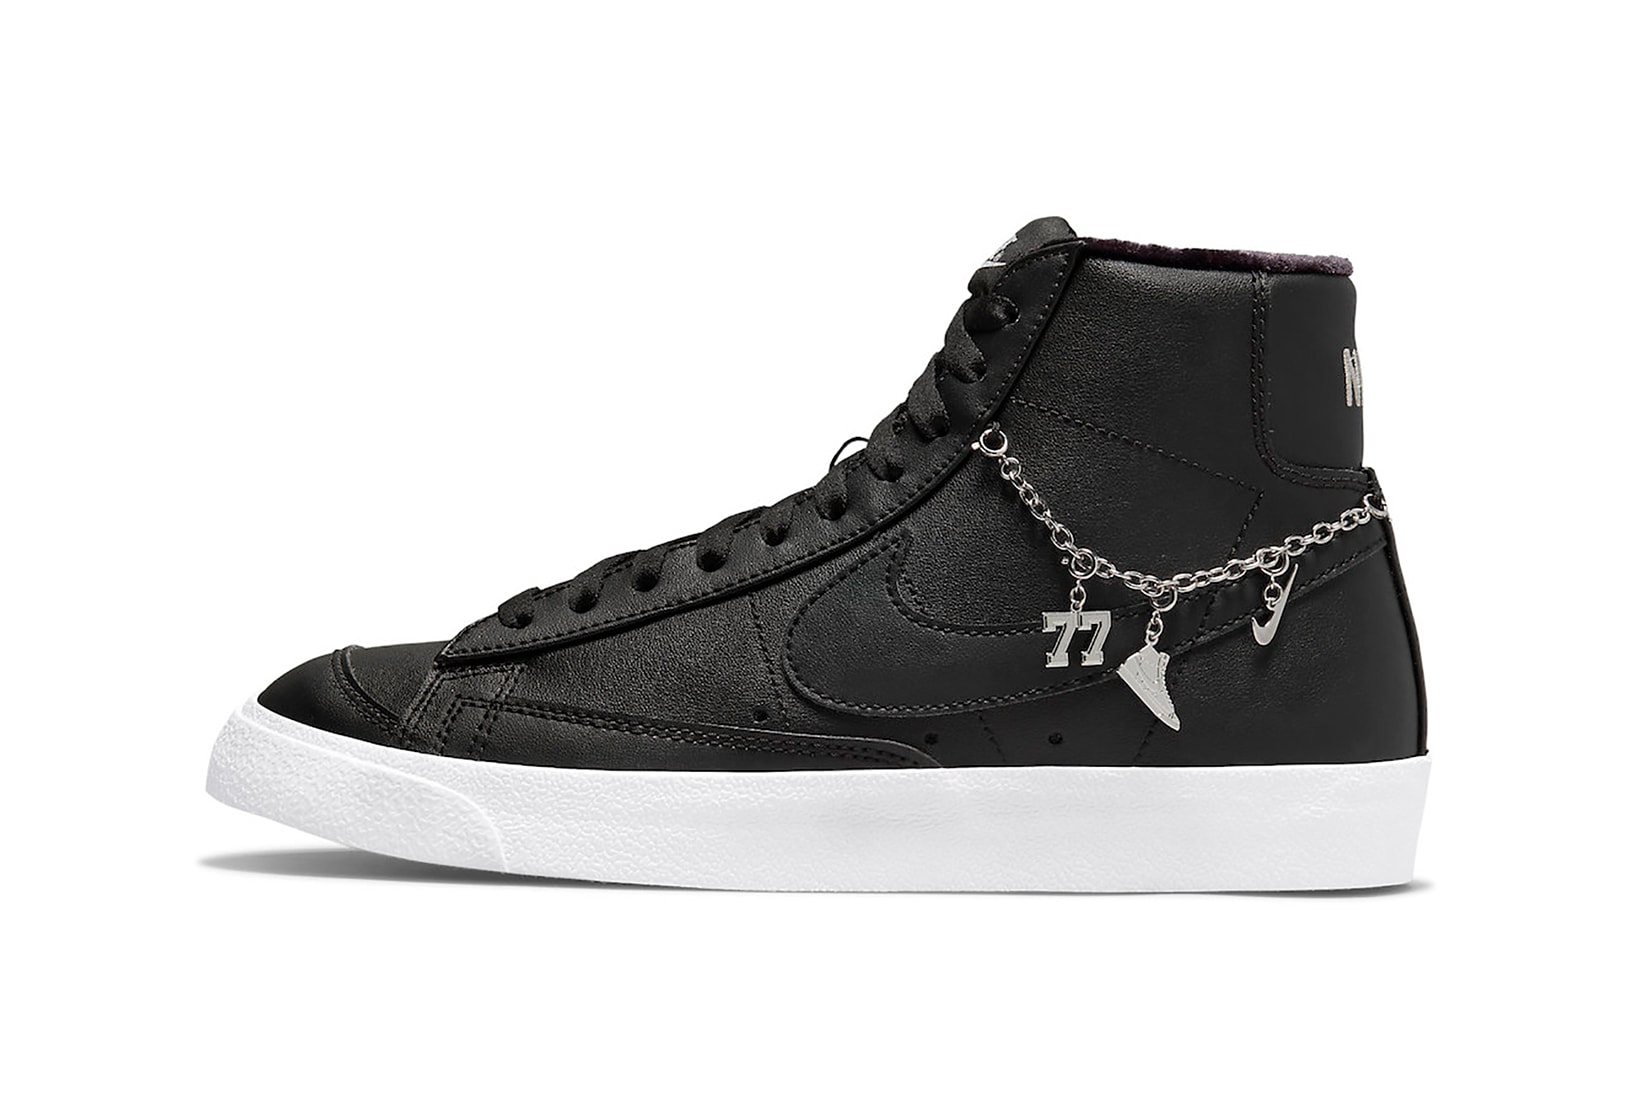 Nike Blazer Mid Lucky Charms Black Metallic Silver Sneakers Footwear Shoes Kicks Lateral